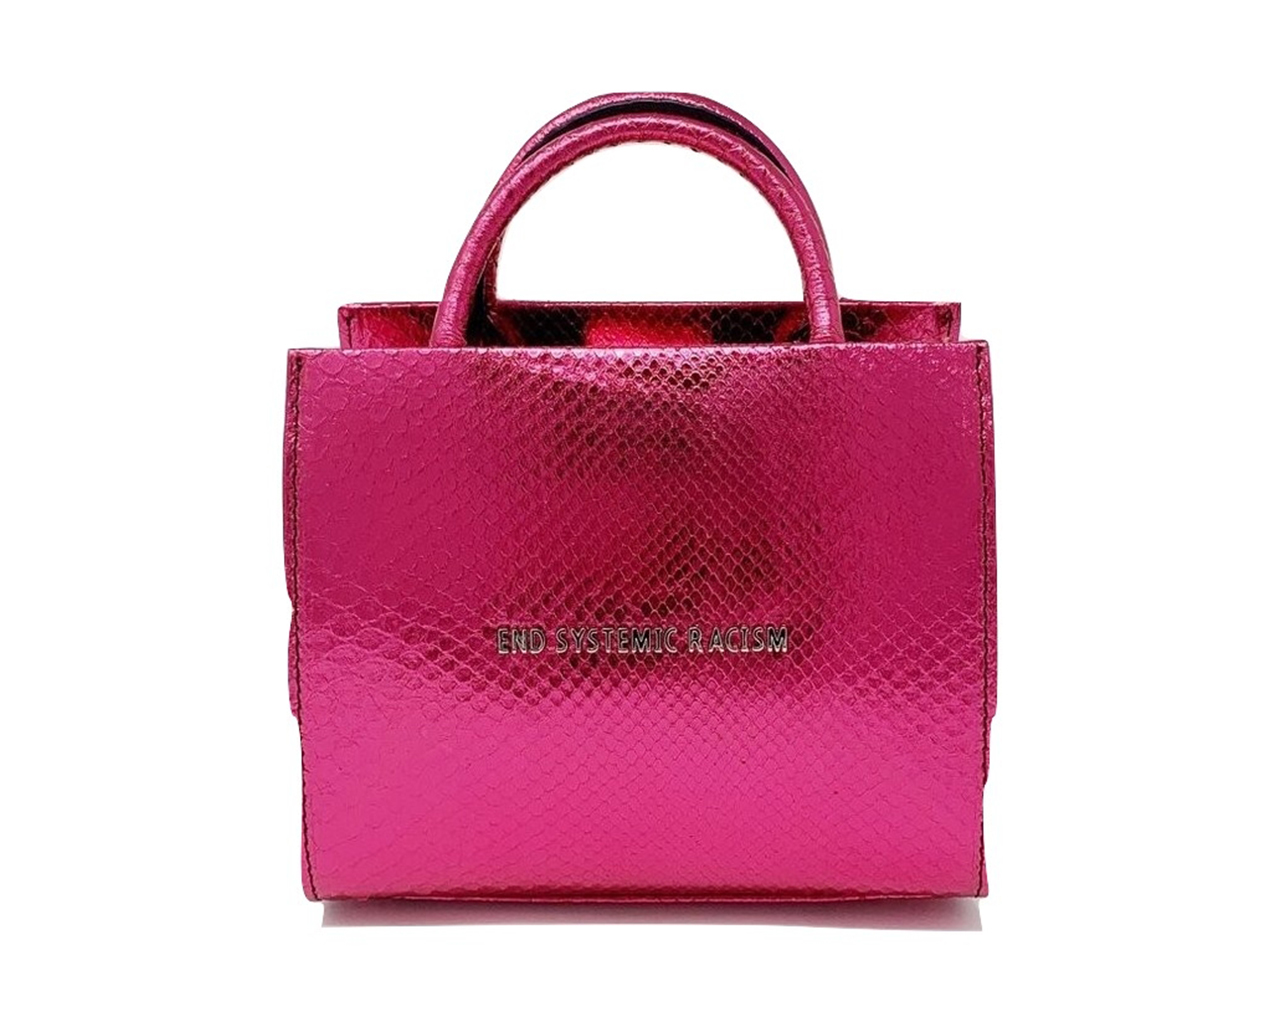 Brandon Blackwood Champions Authenticity in Handbag Designs - Grazia